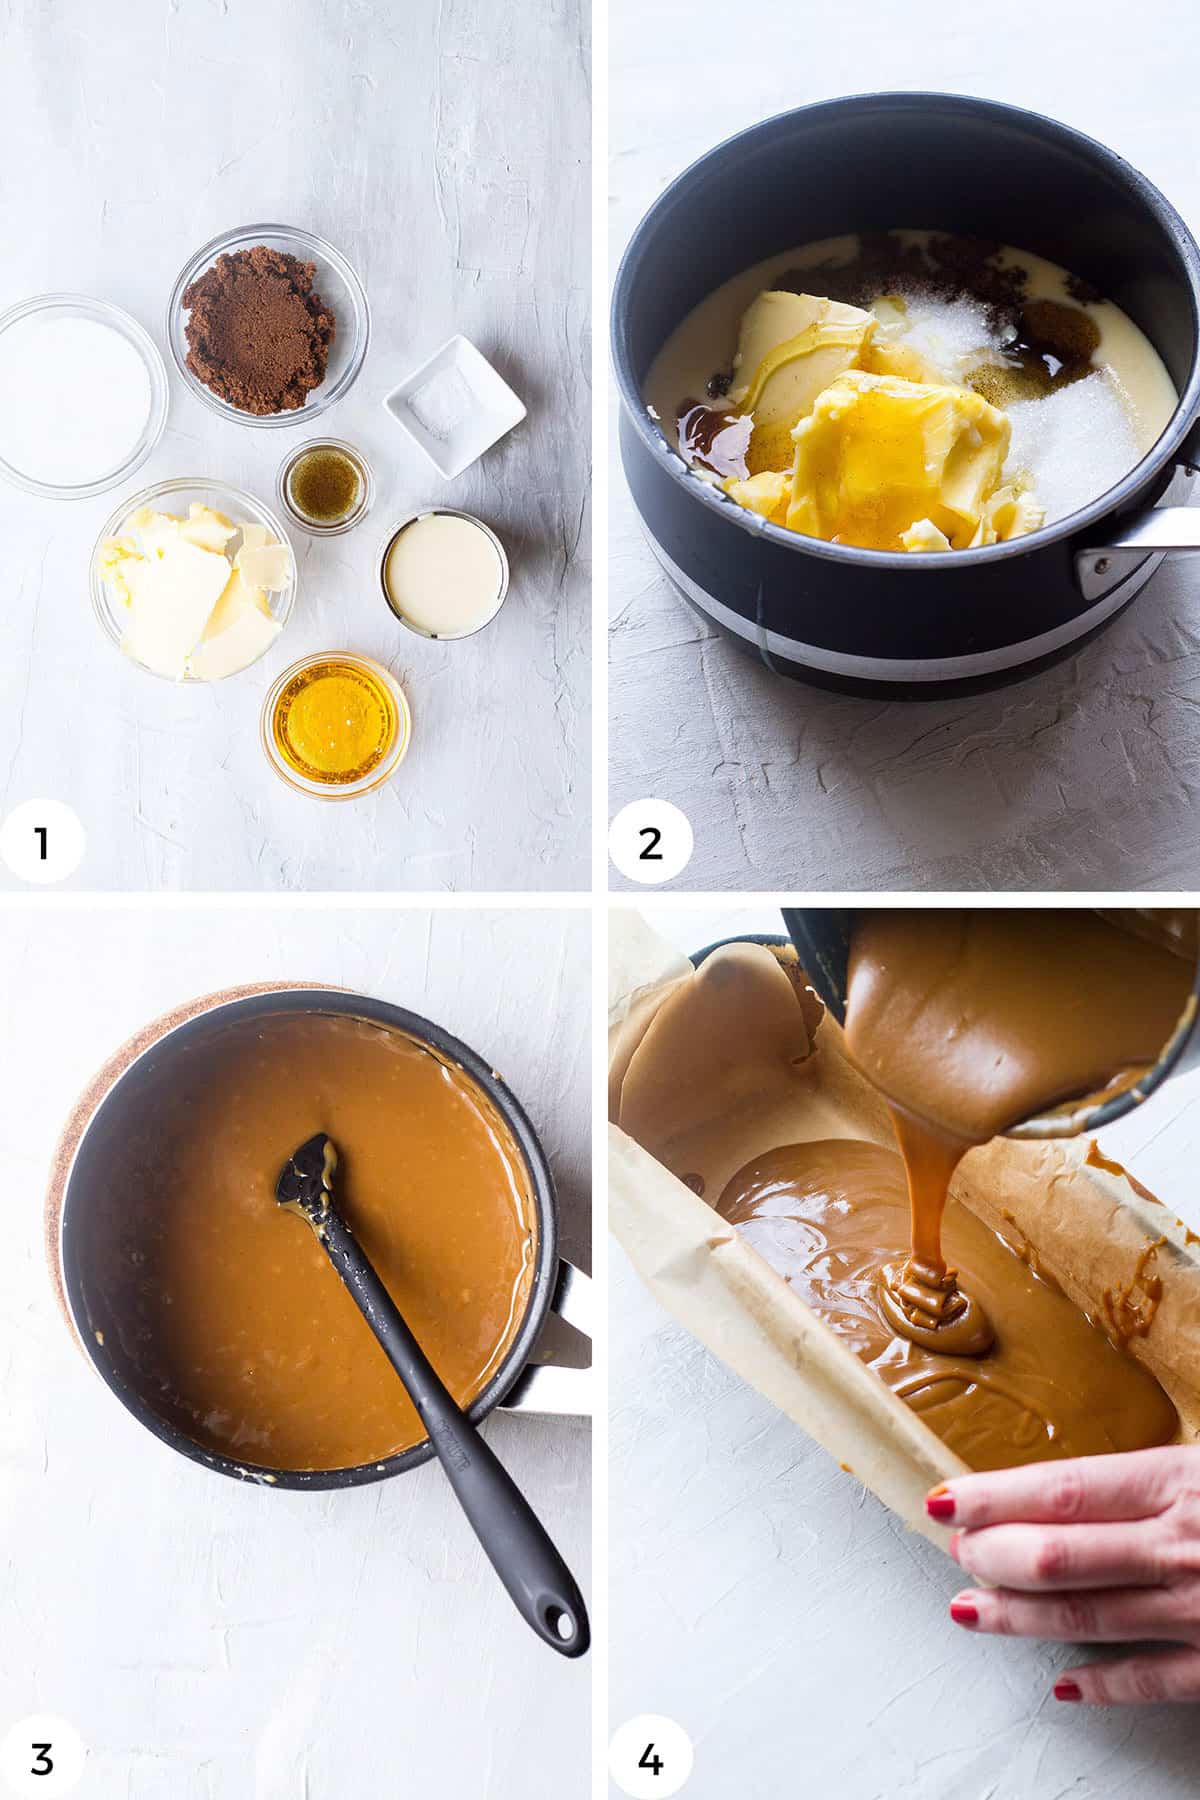 Steps to make the caramel.